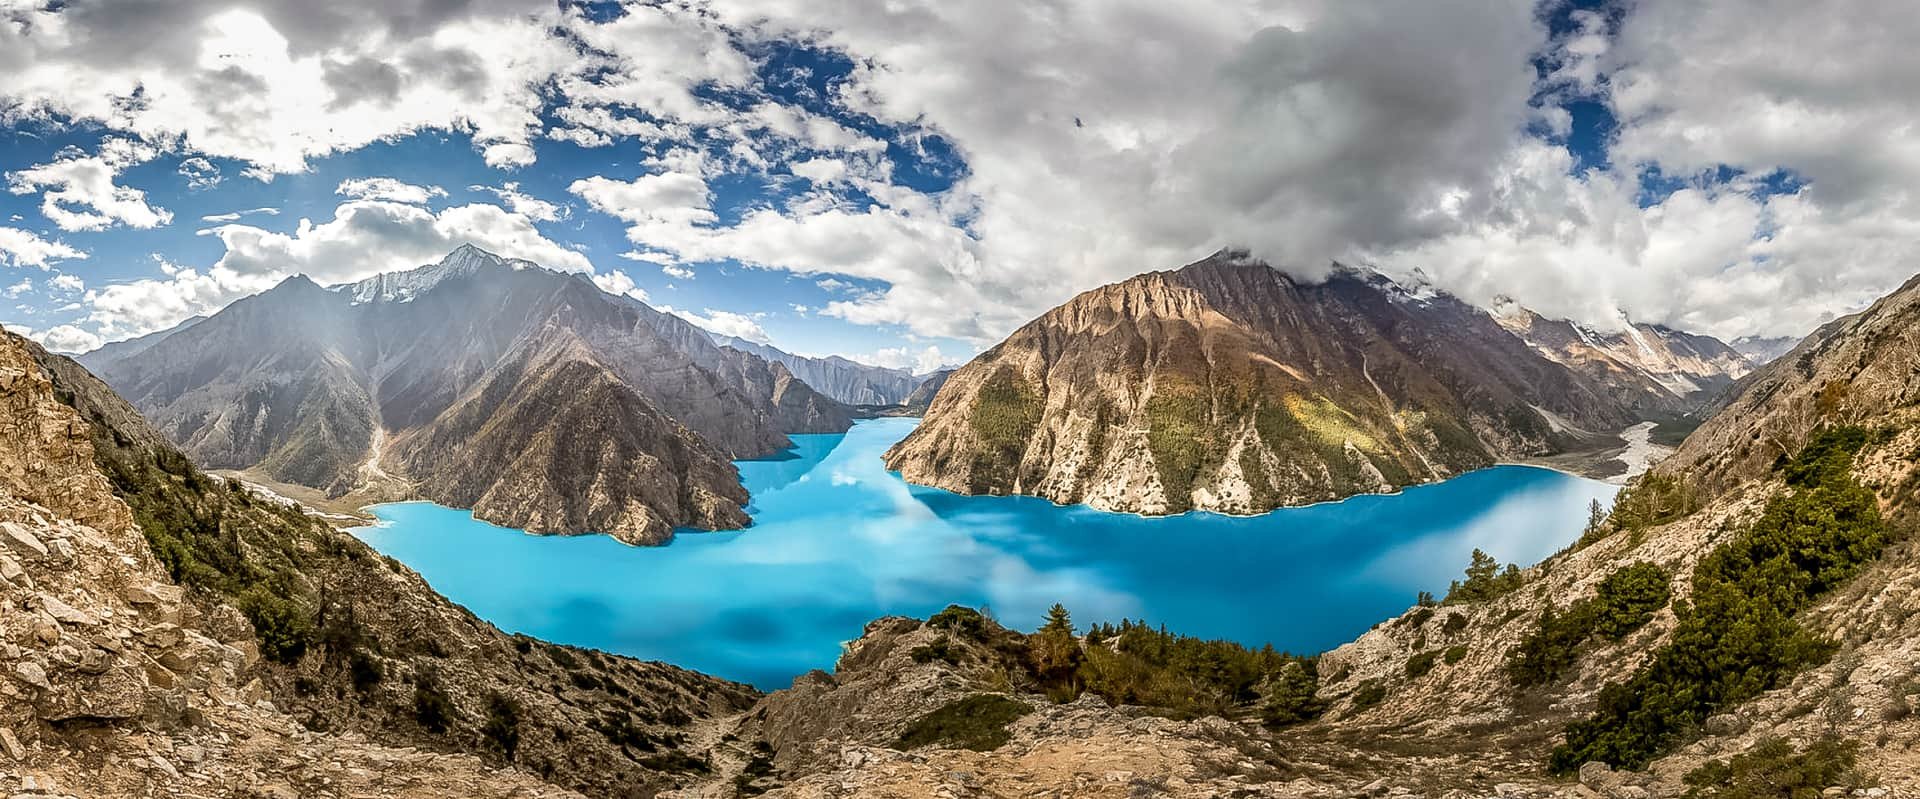 nepal-trekking-poksundo-lake.jpeg